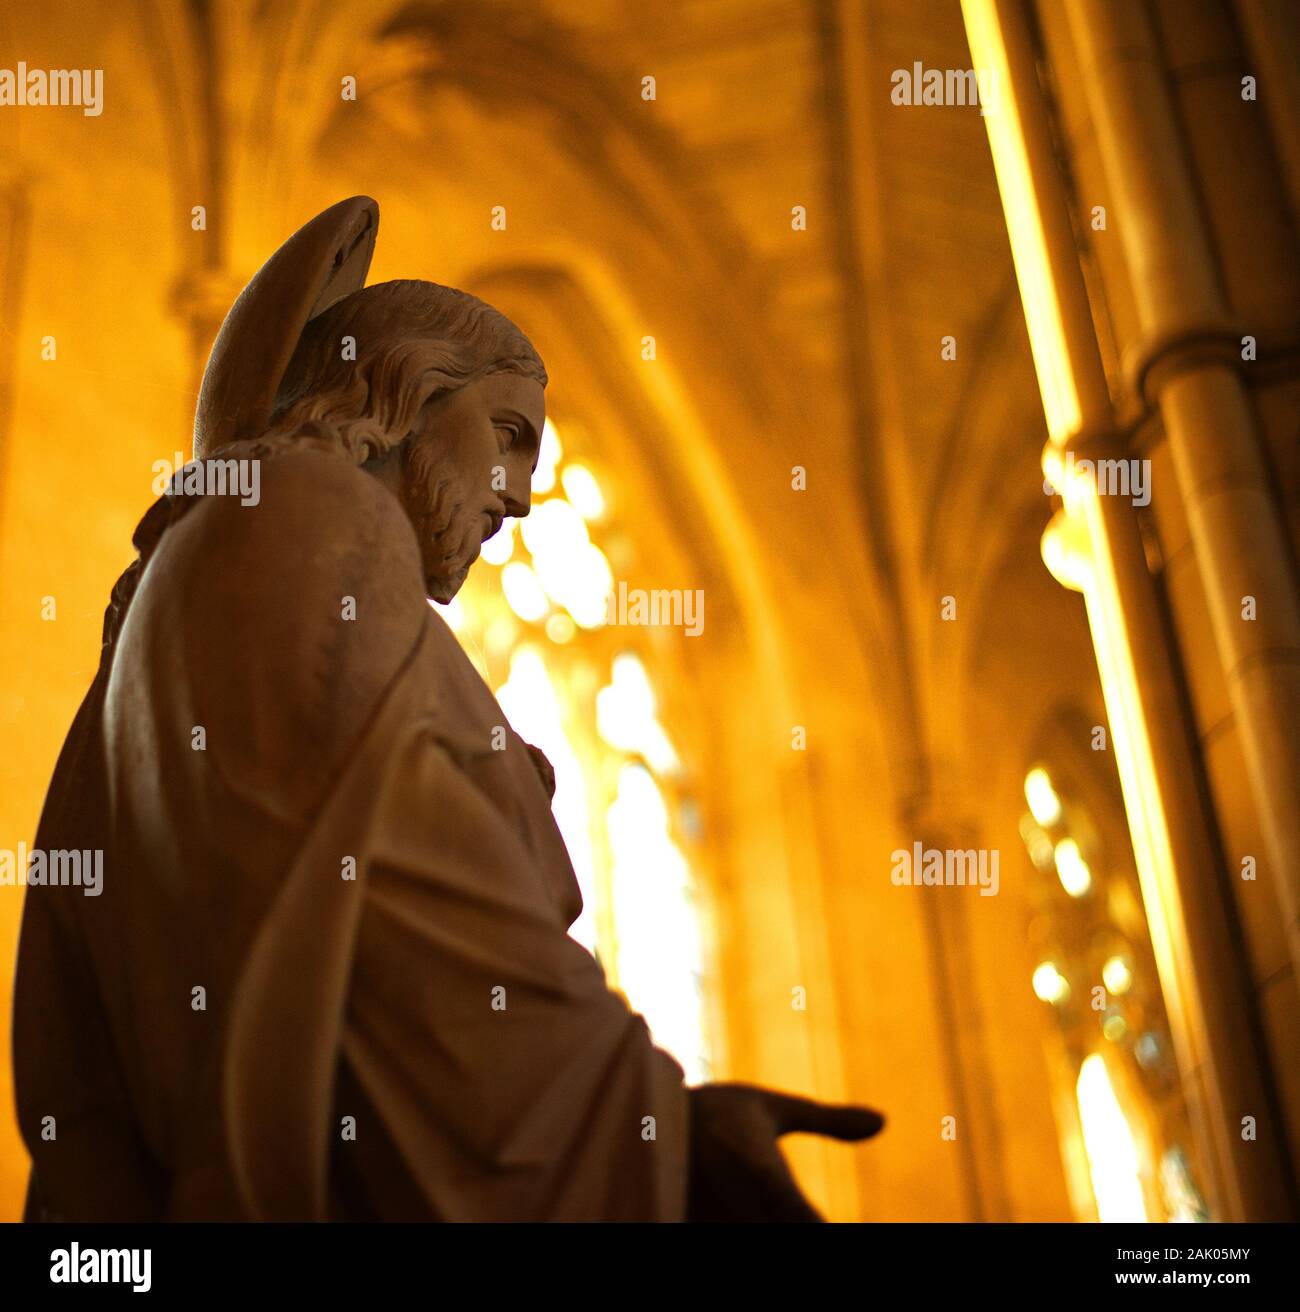 Statua di Gesù in piedi nella cattedrale Foto Stock